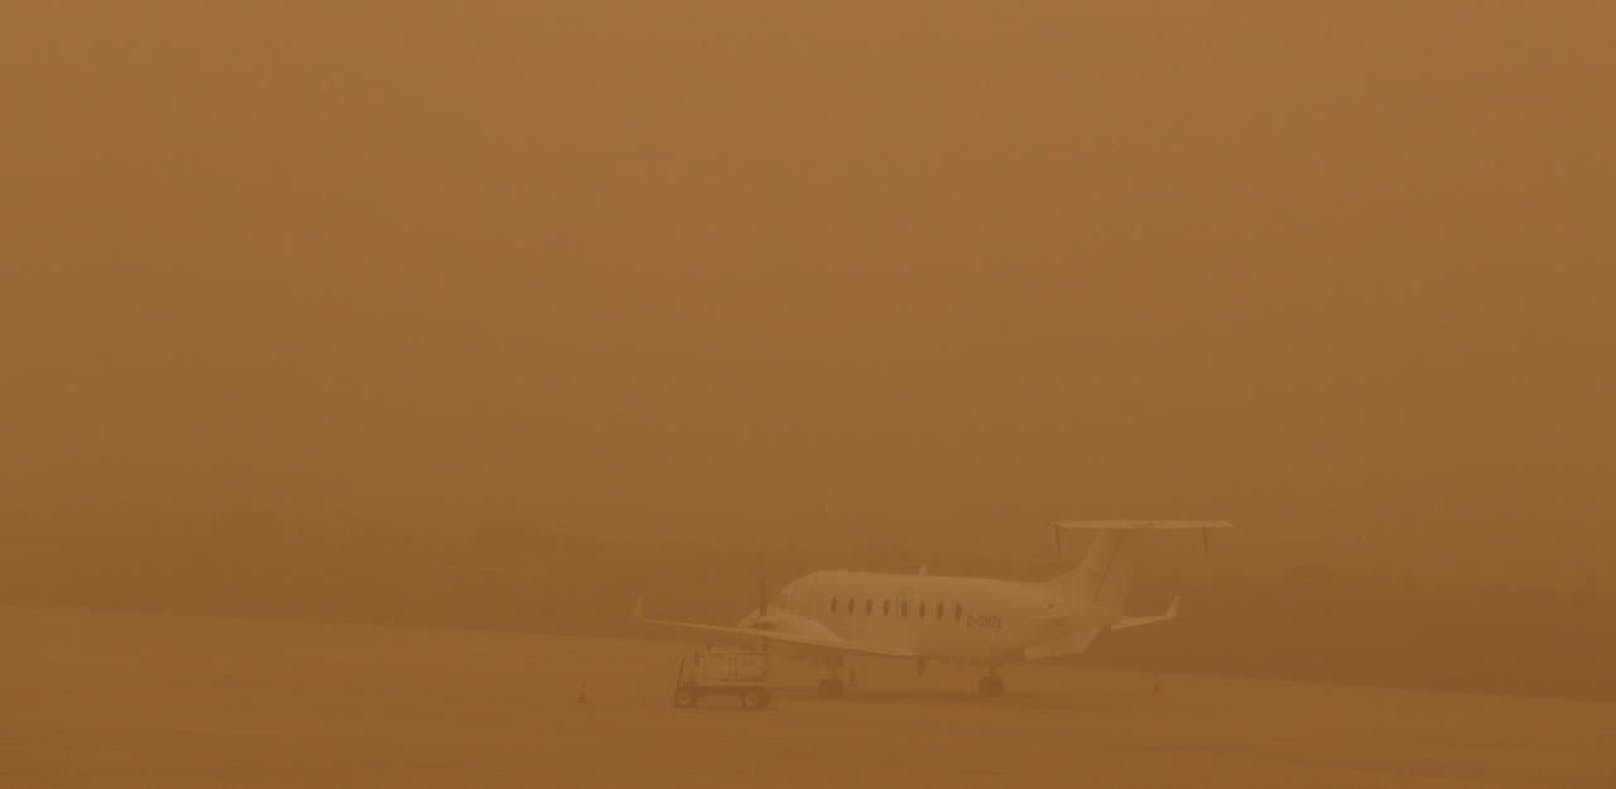 Sahara-Sandsturm legt Flugverkehr in lahm